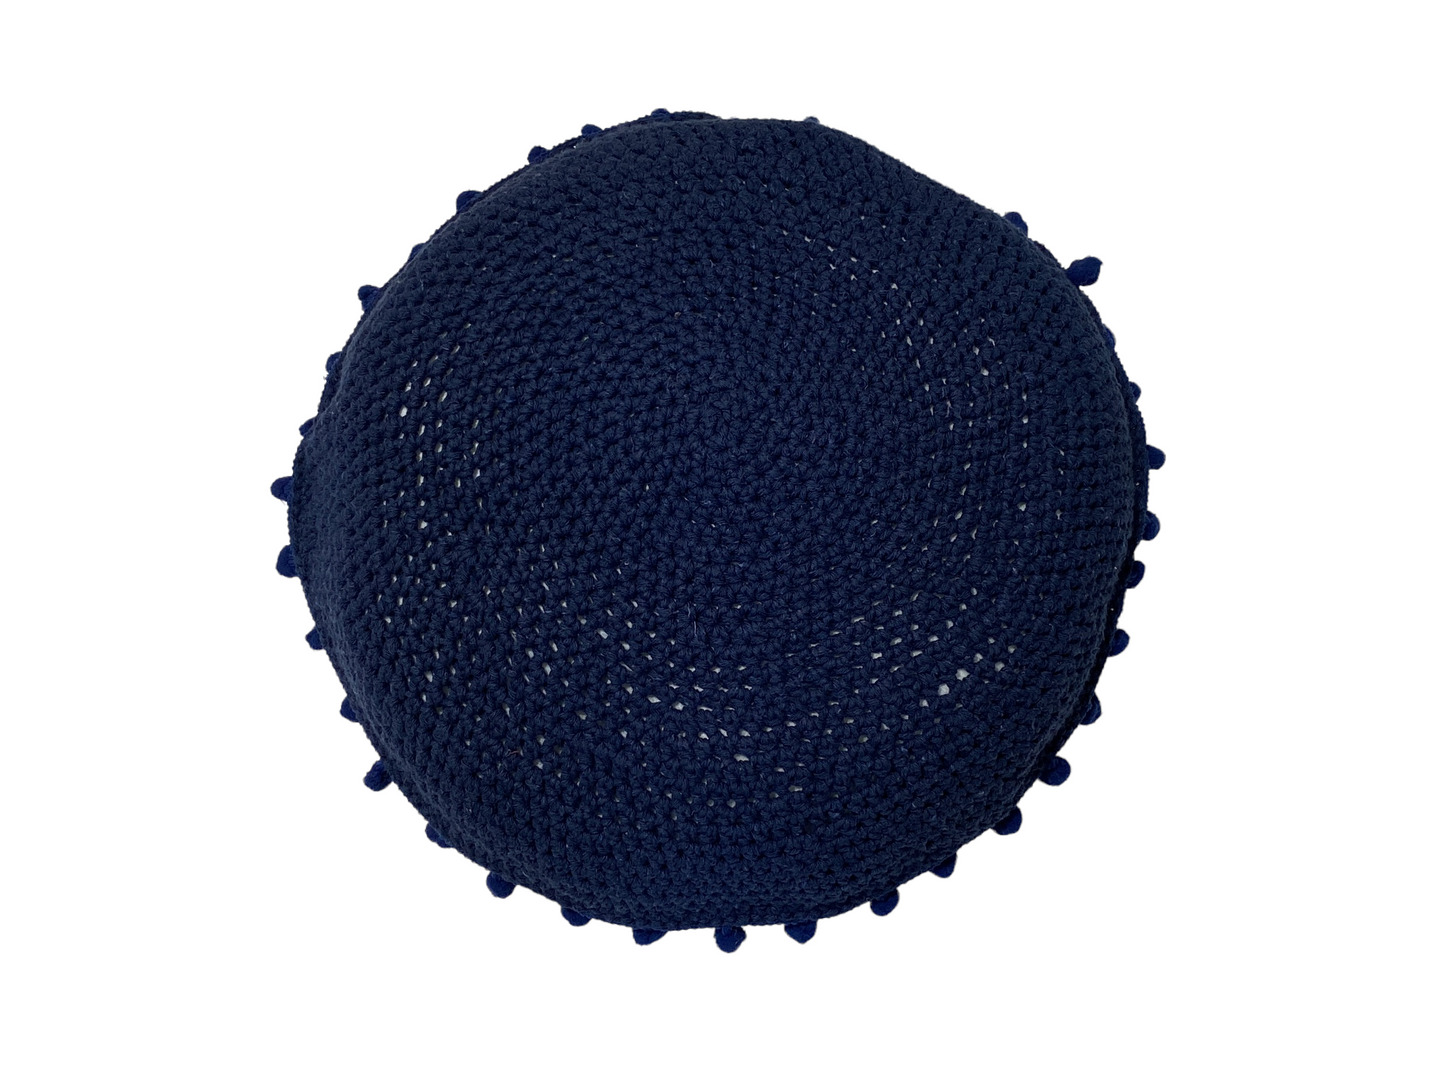 #4718 Handmade Round Crochet Pillow With Decorative Tassels